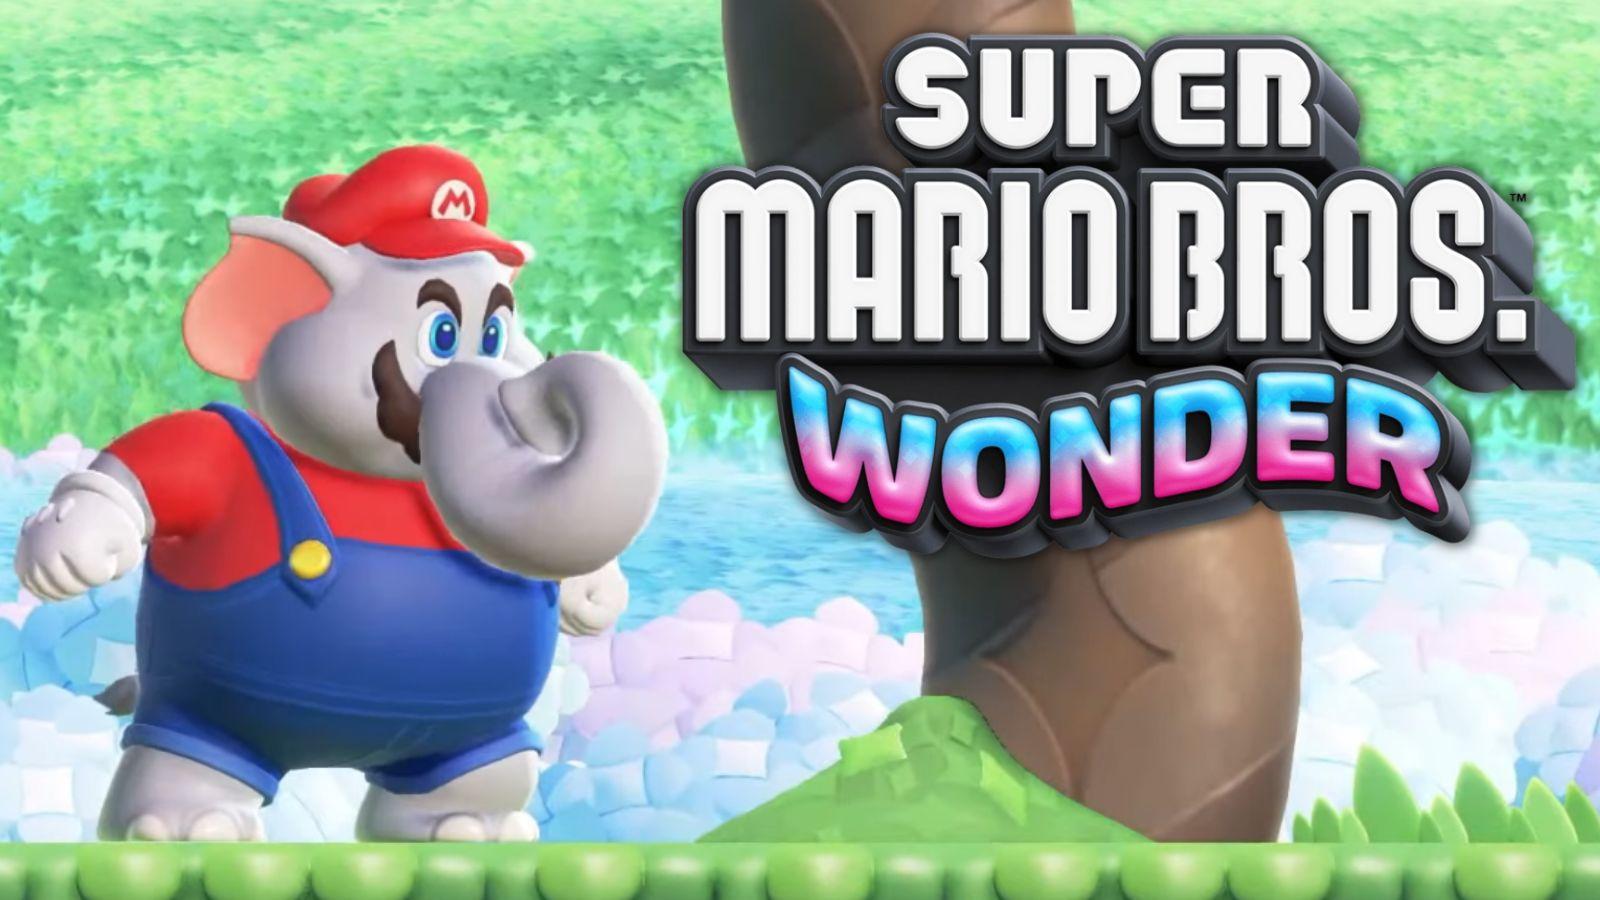 Super Mario Bros. Wonder mod